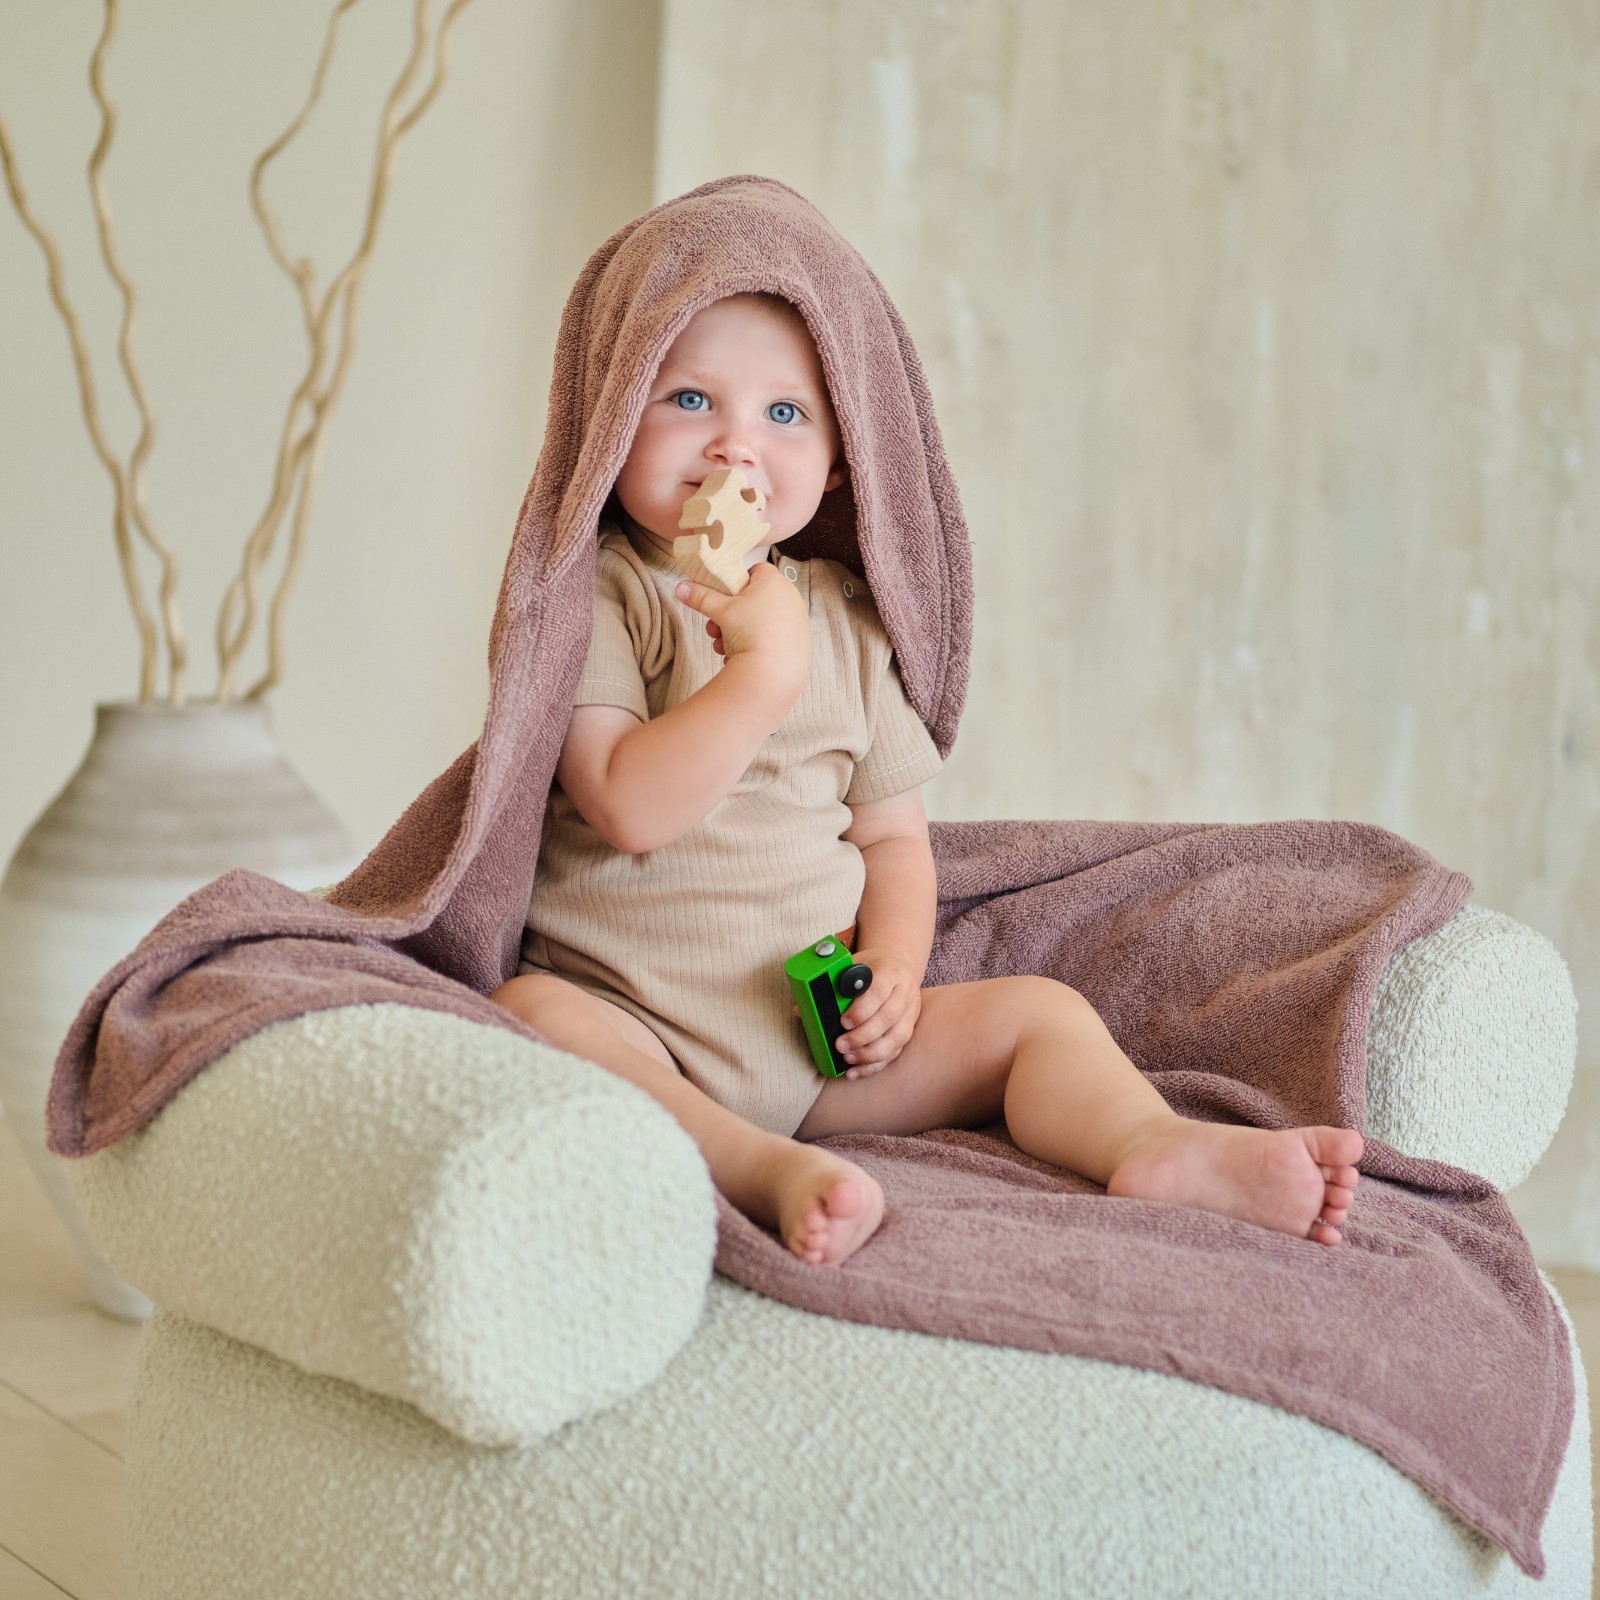 Детское полотенце Sherri цвет: капучино (85х85 см), размер 85х85 см